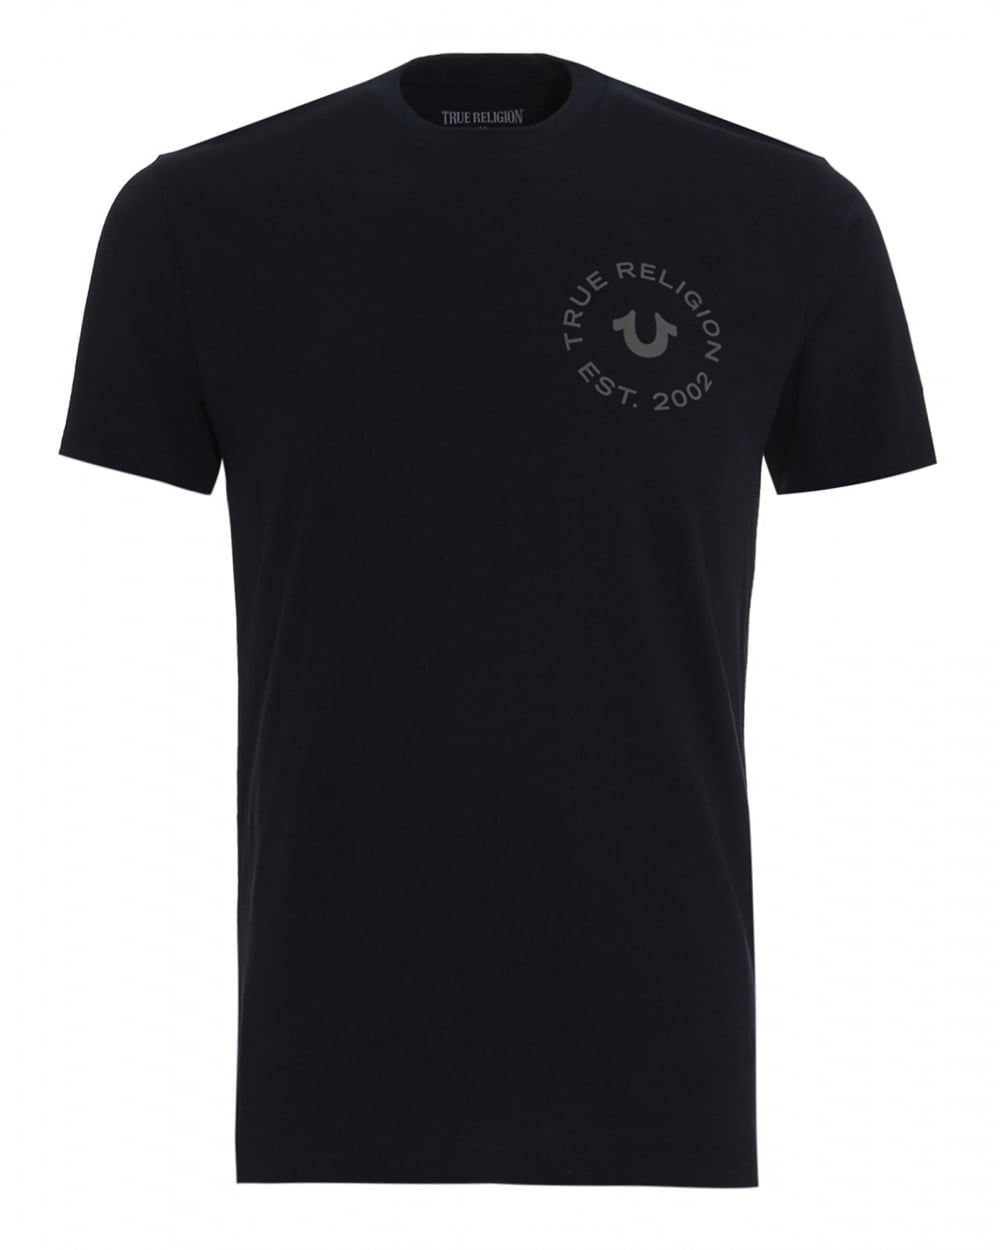 Black and White with Blue Circle Logo - True Religion Mens T-Shirt, Navy Blue Circle Logo Tee